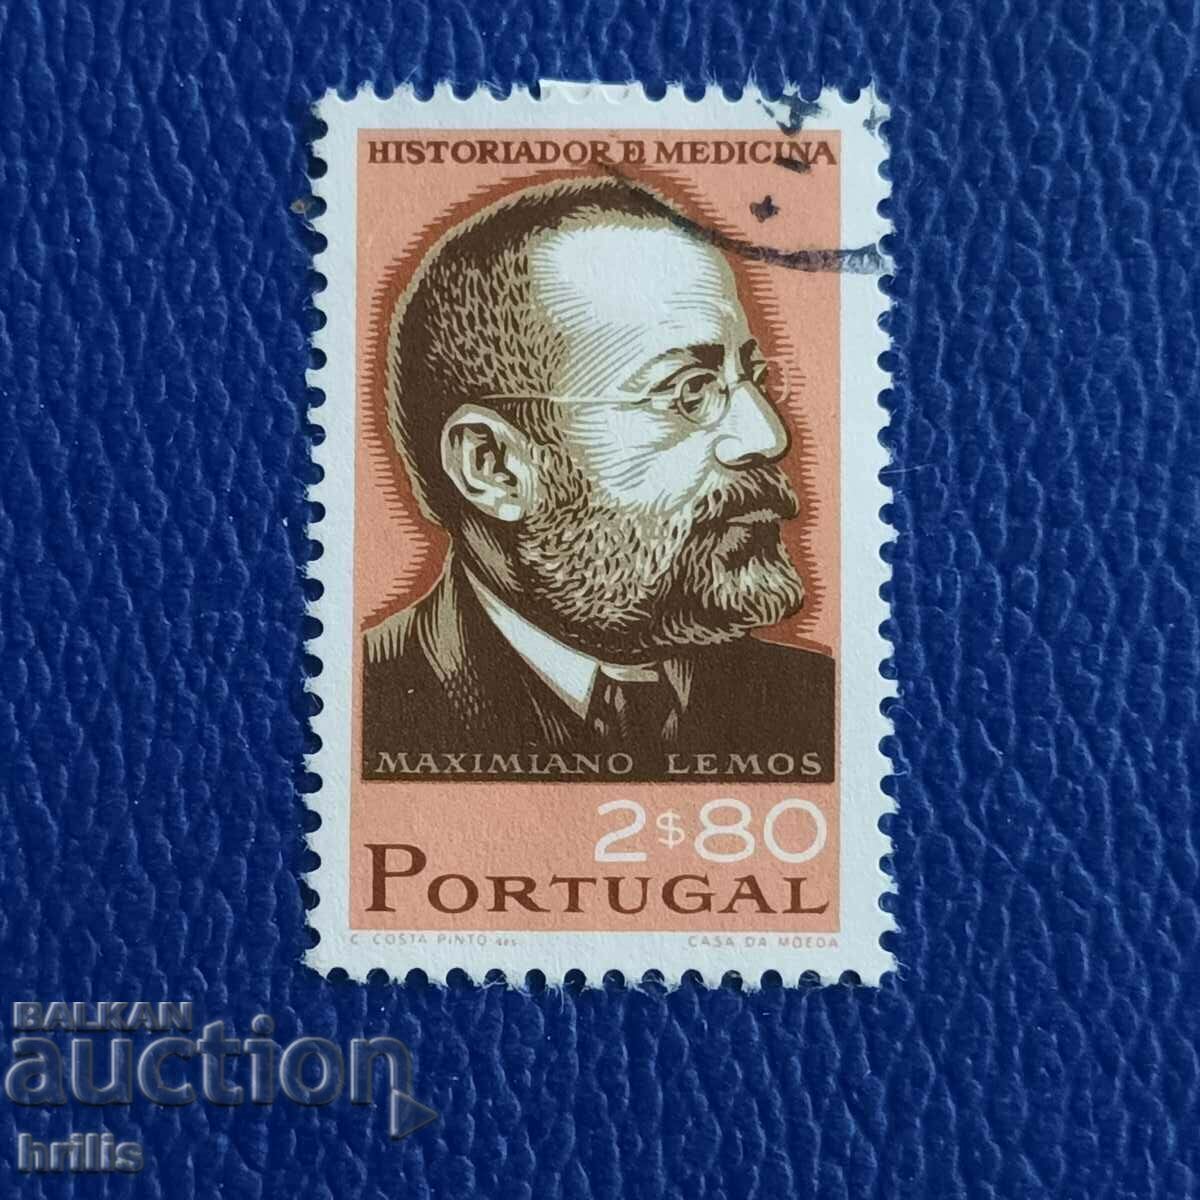 PORTUGAL - MAXIMIANO LEMO, HISTORY OF MEDICINE